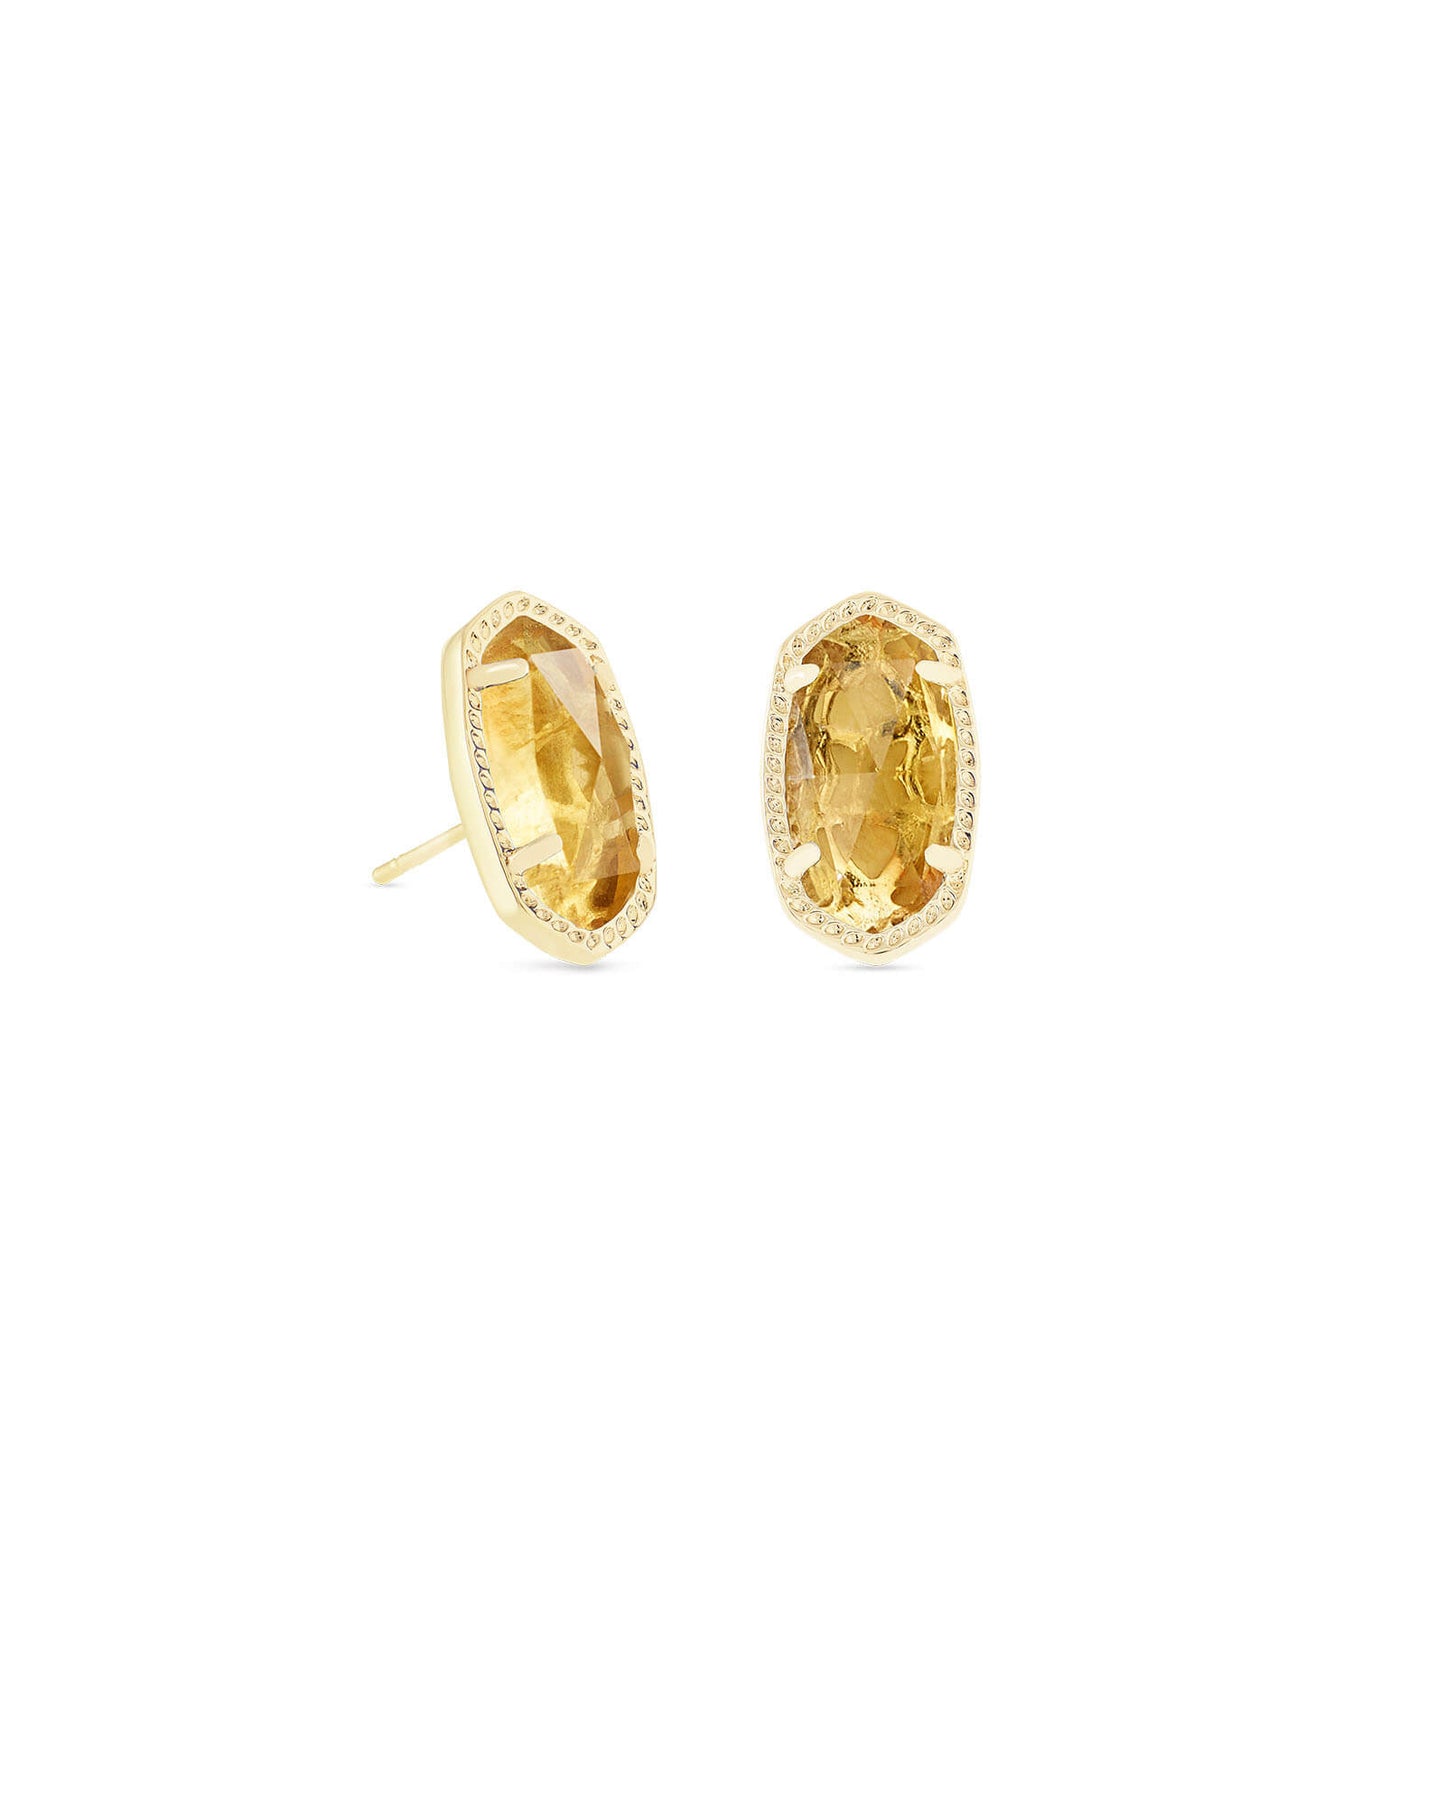 Kendra Scott Ellie Stud Earrings Gold Orange Citrine Quartz-Earrings-Kendra Scott-E6031GLD-The Twisted Chandelier